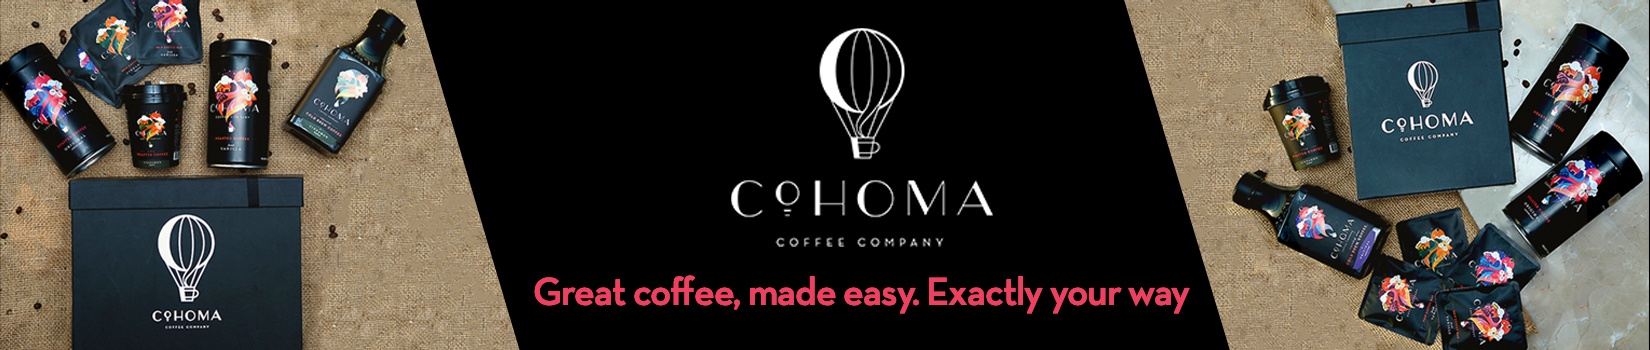 Cohoma Coffee